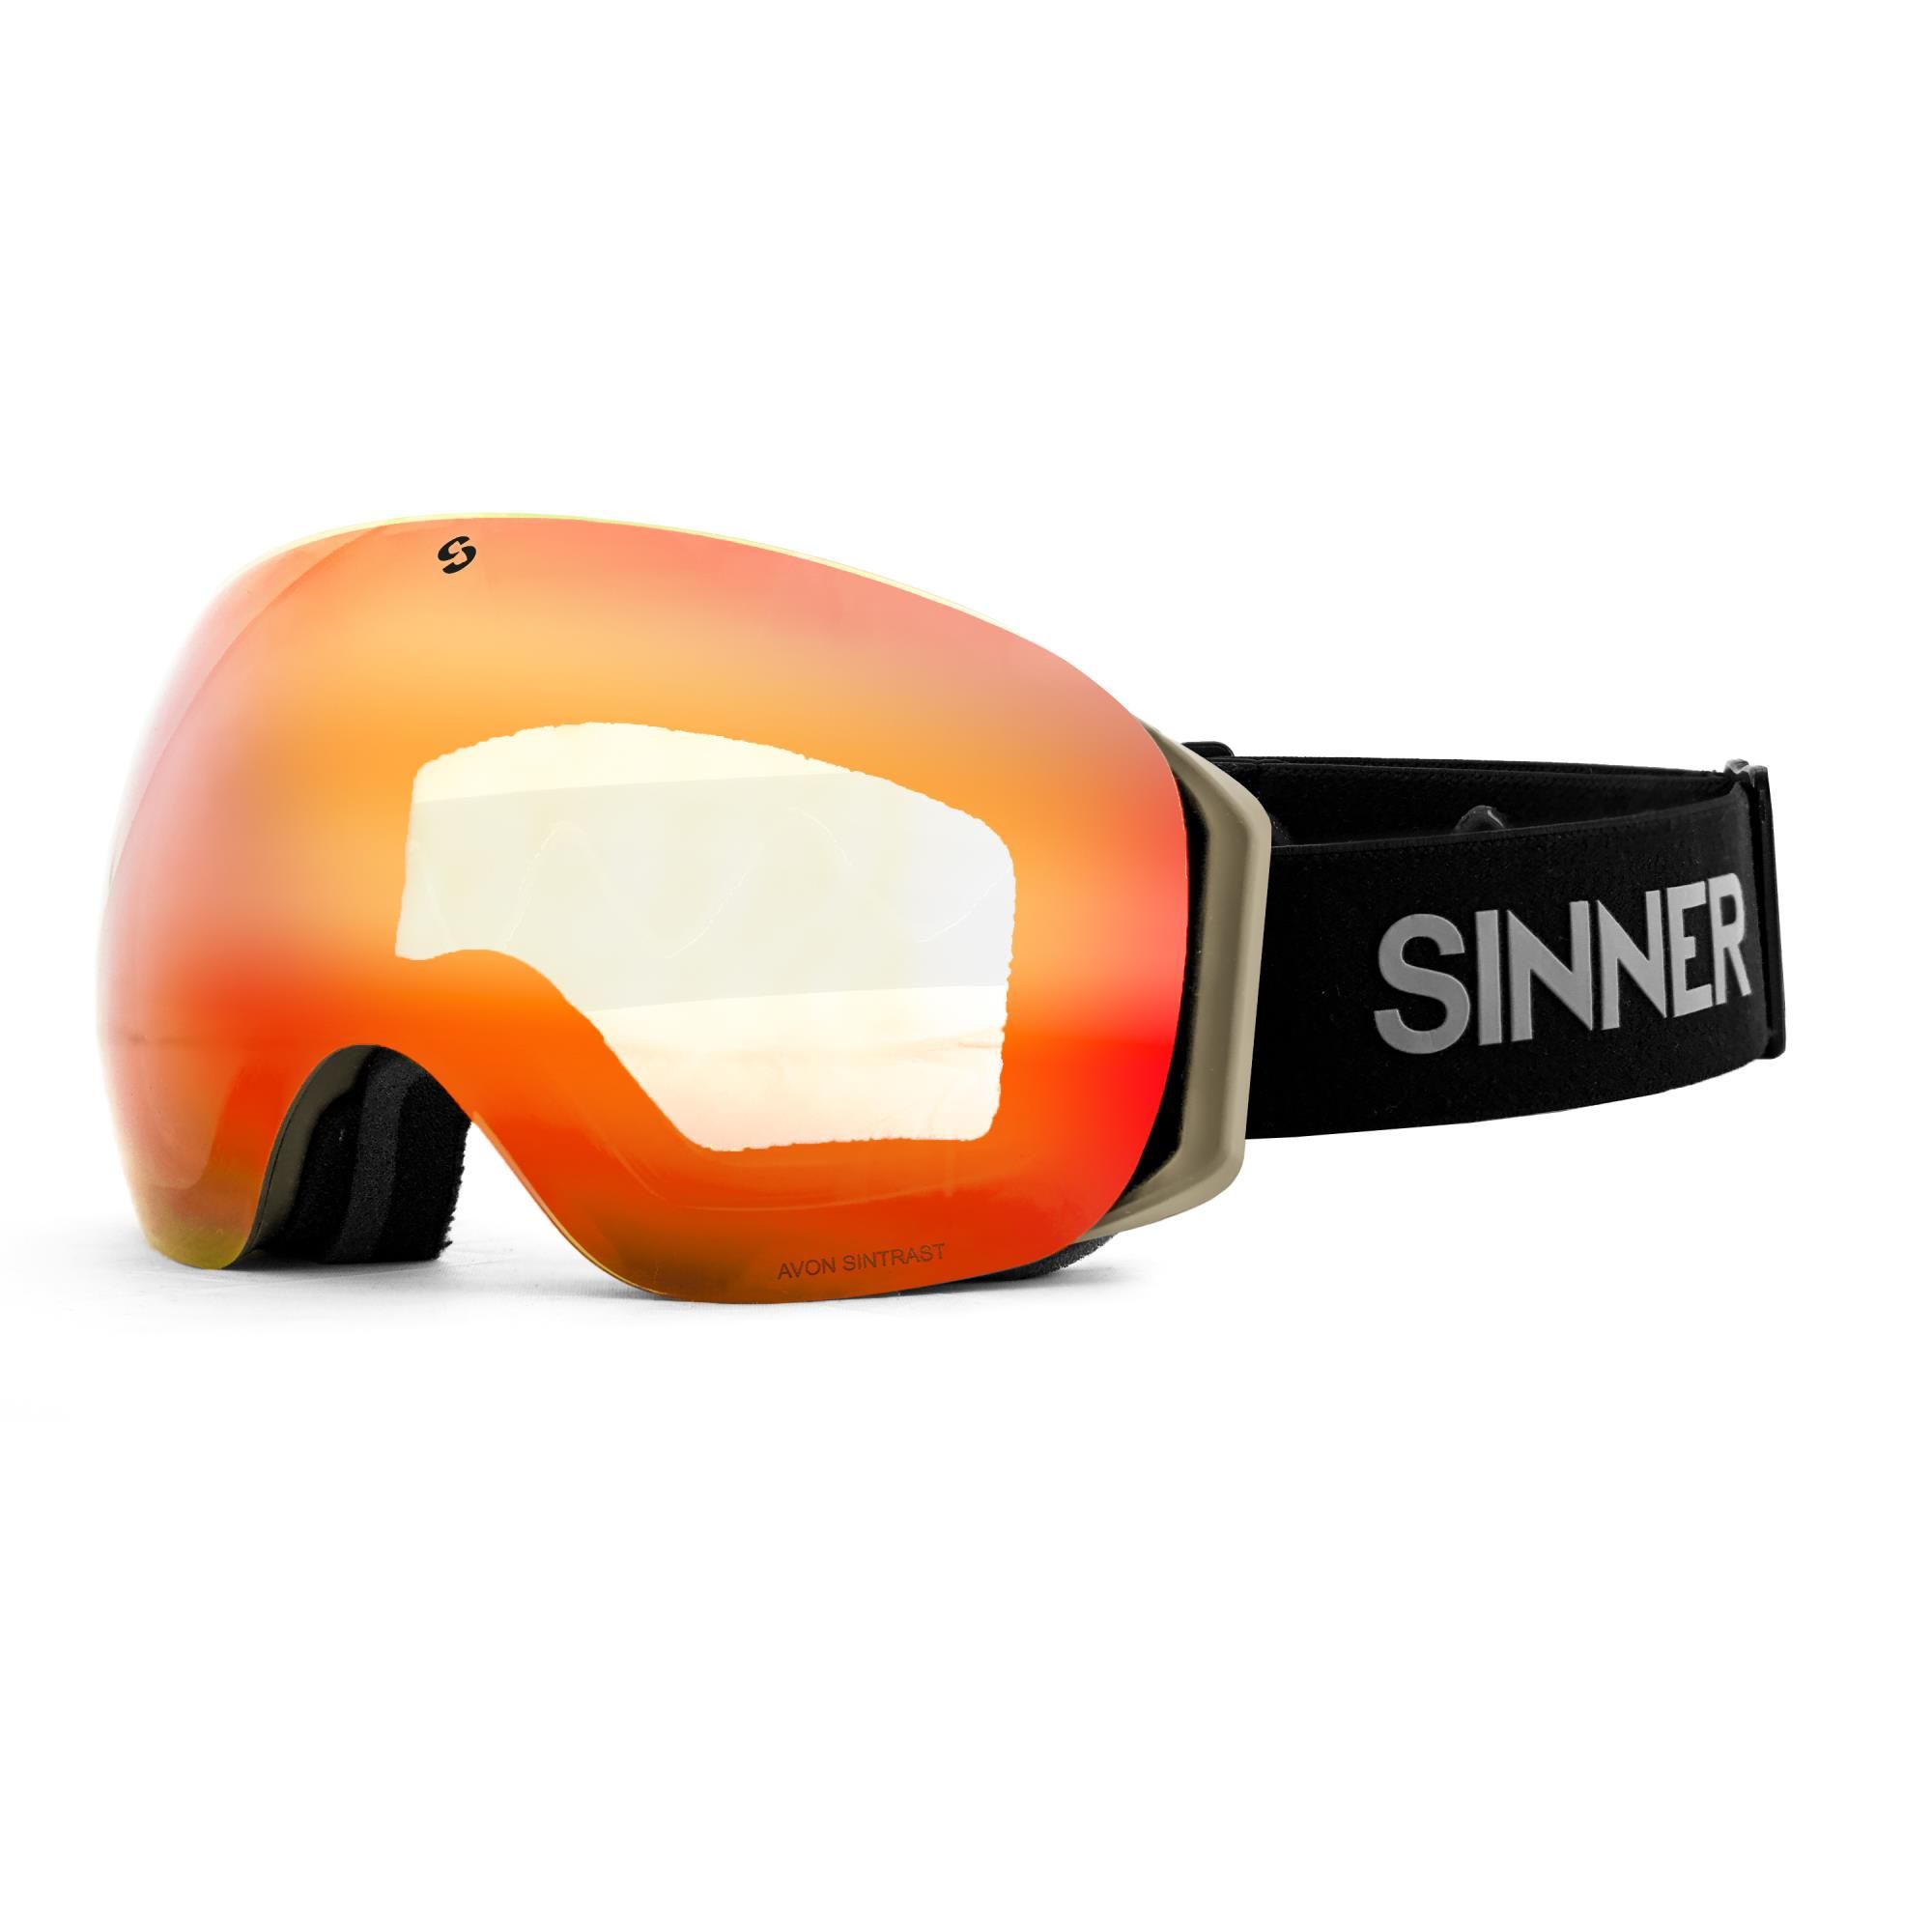 blad Neem een ​​bad belegd broodje Sinner skibril Avon + spare lens online kopen?